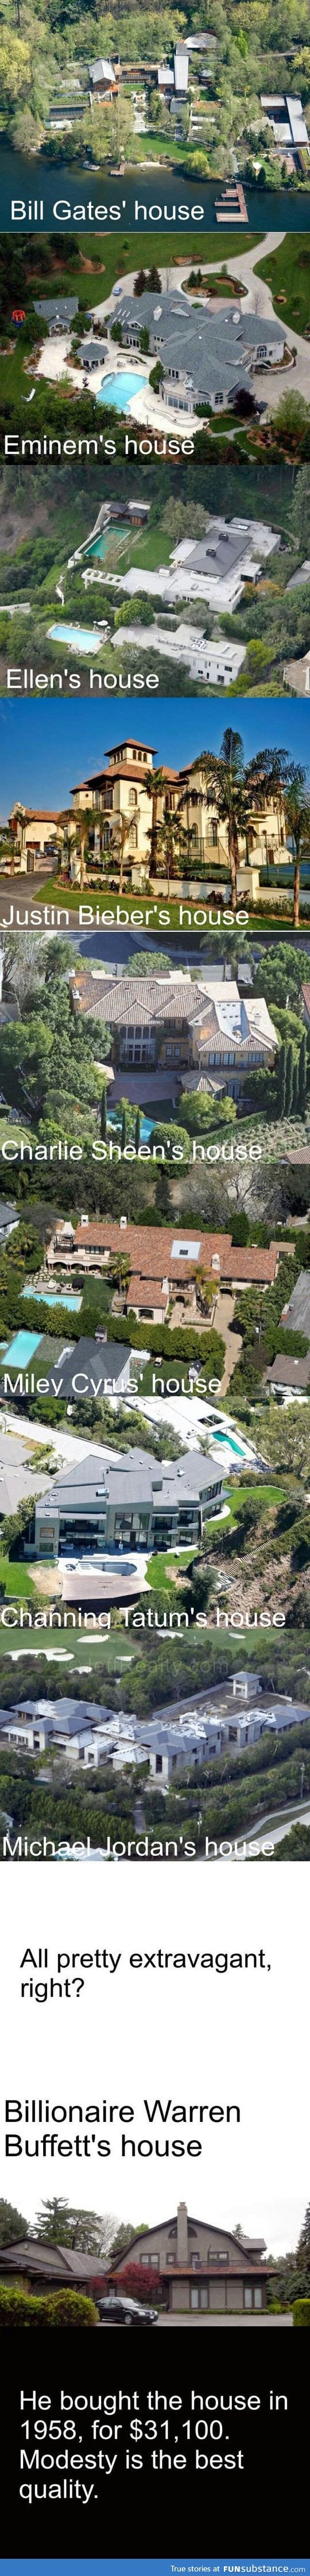 Celebrity homes